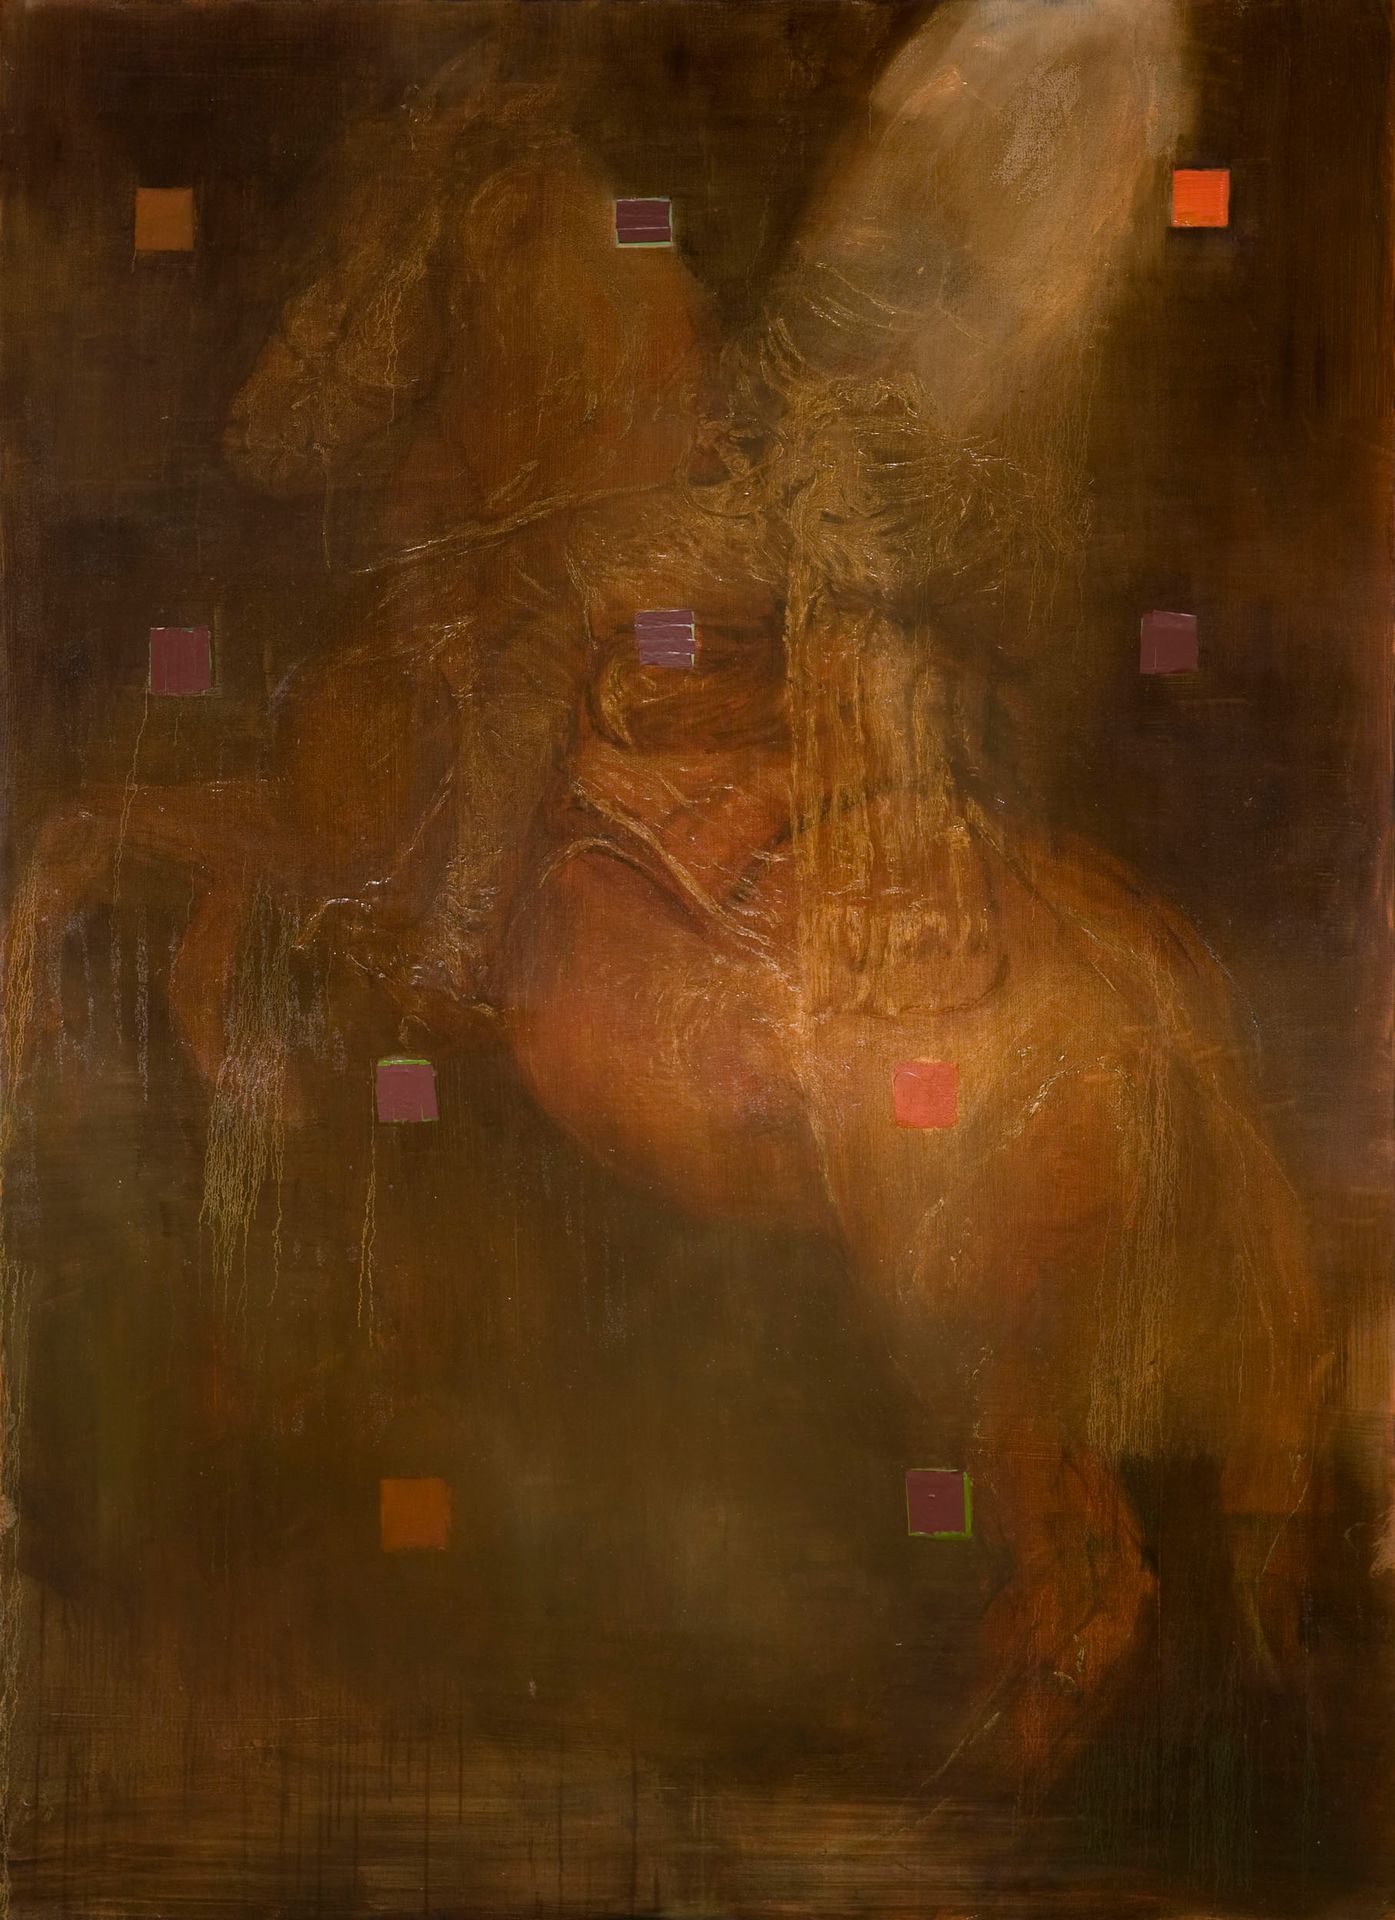 MATTHIEU RONSSE Matthieu Ronsse

(1981)

下面的马在咖啡因上剧烈燃烧

2005

布面油画

188 x 138 cm&hellip;